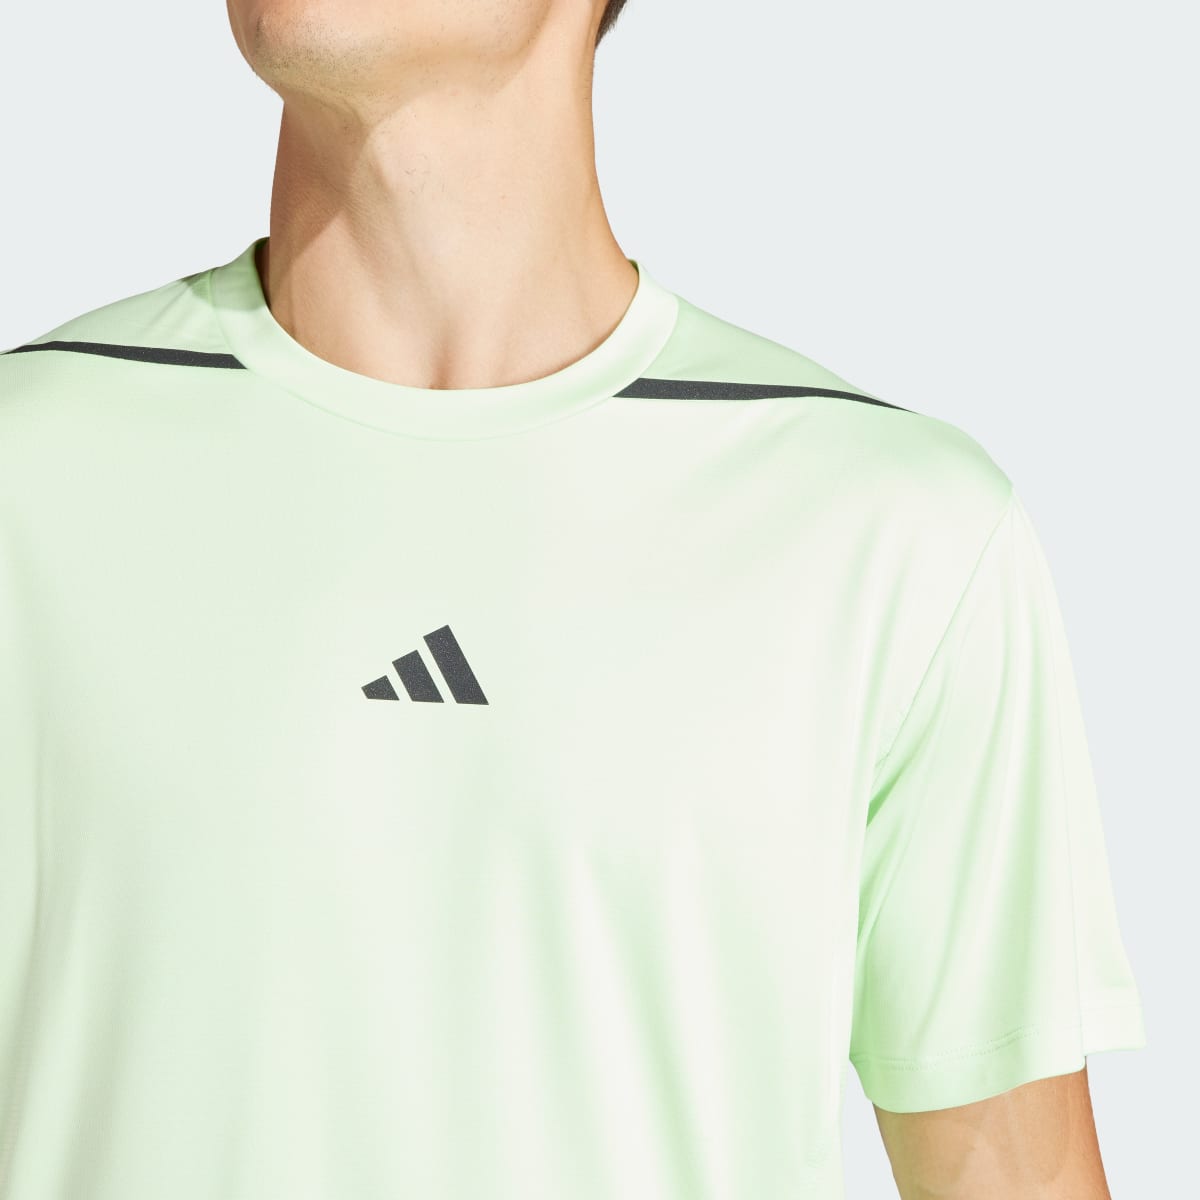 Adidas Designed for Training Workout T-Shirt. 6